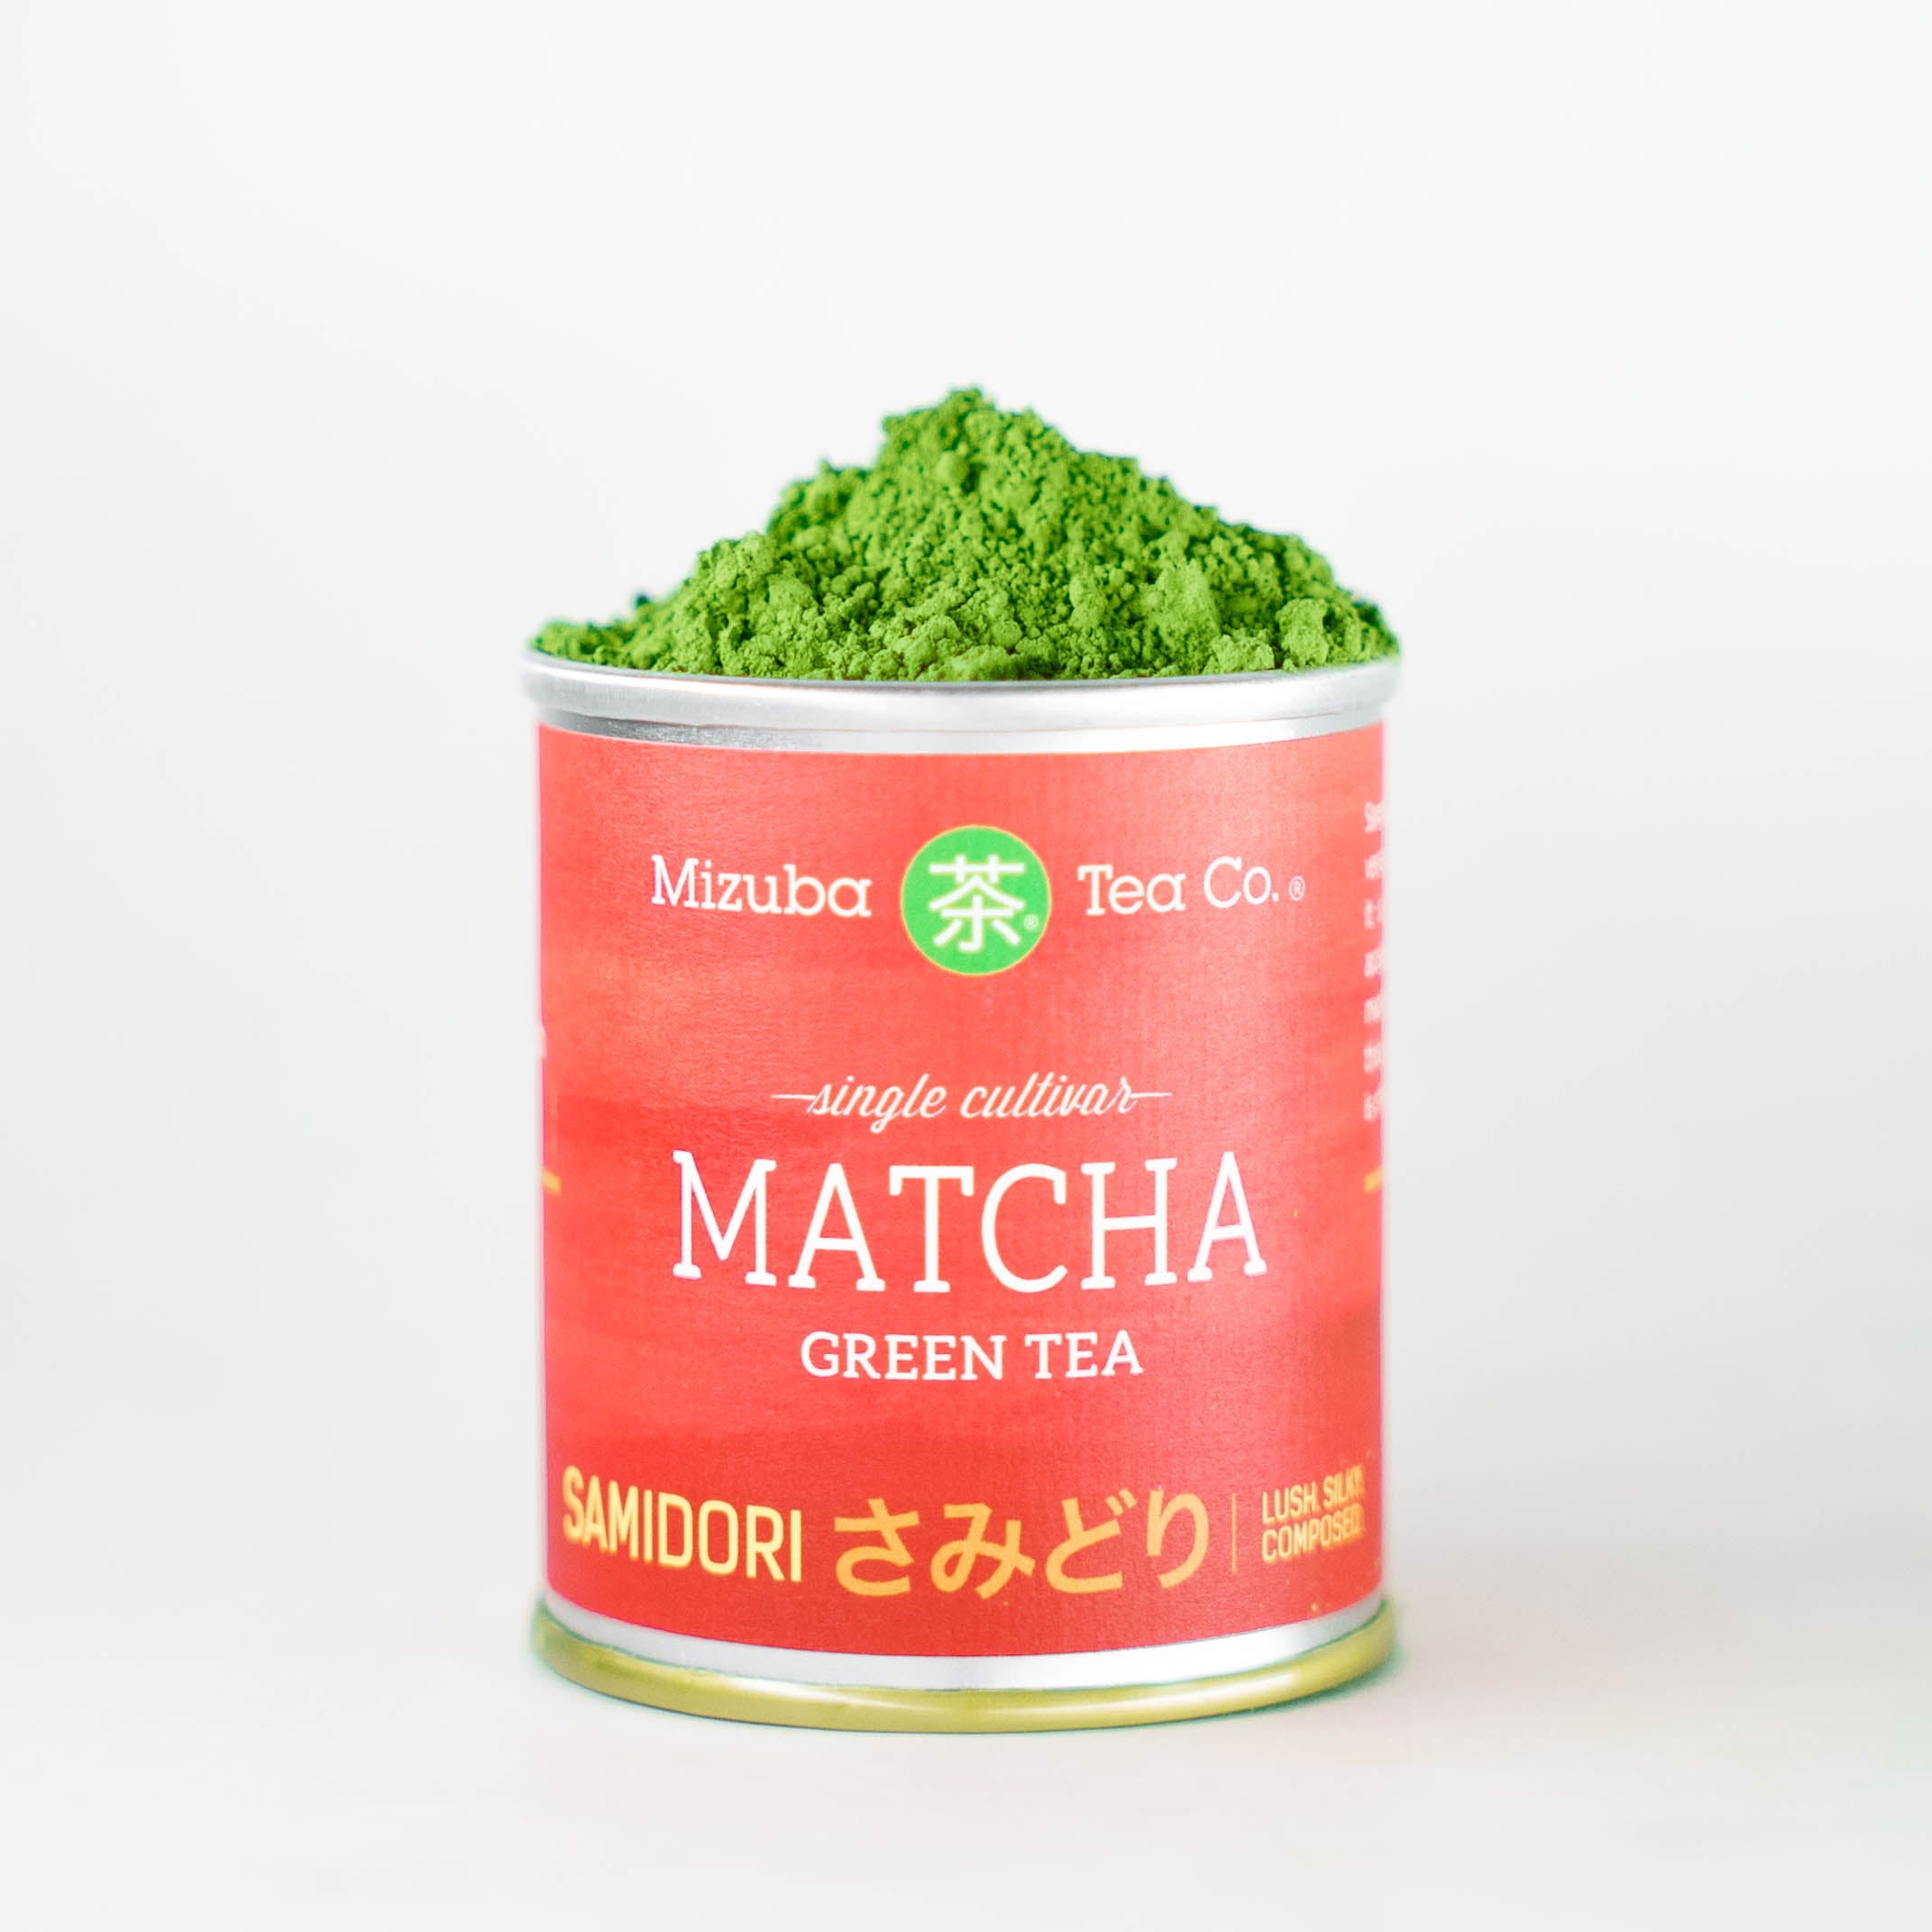 Nagomi Organic, Ceremonial Grade Matcha Green Tea